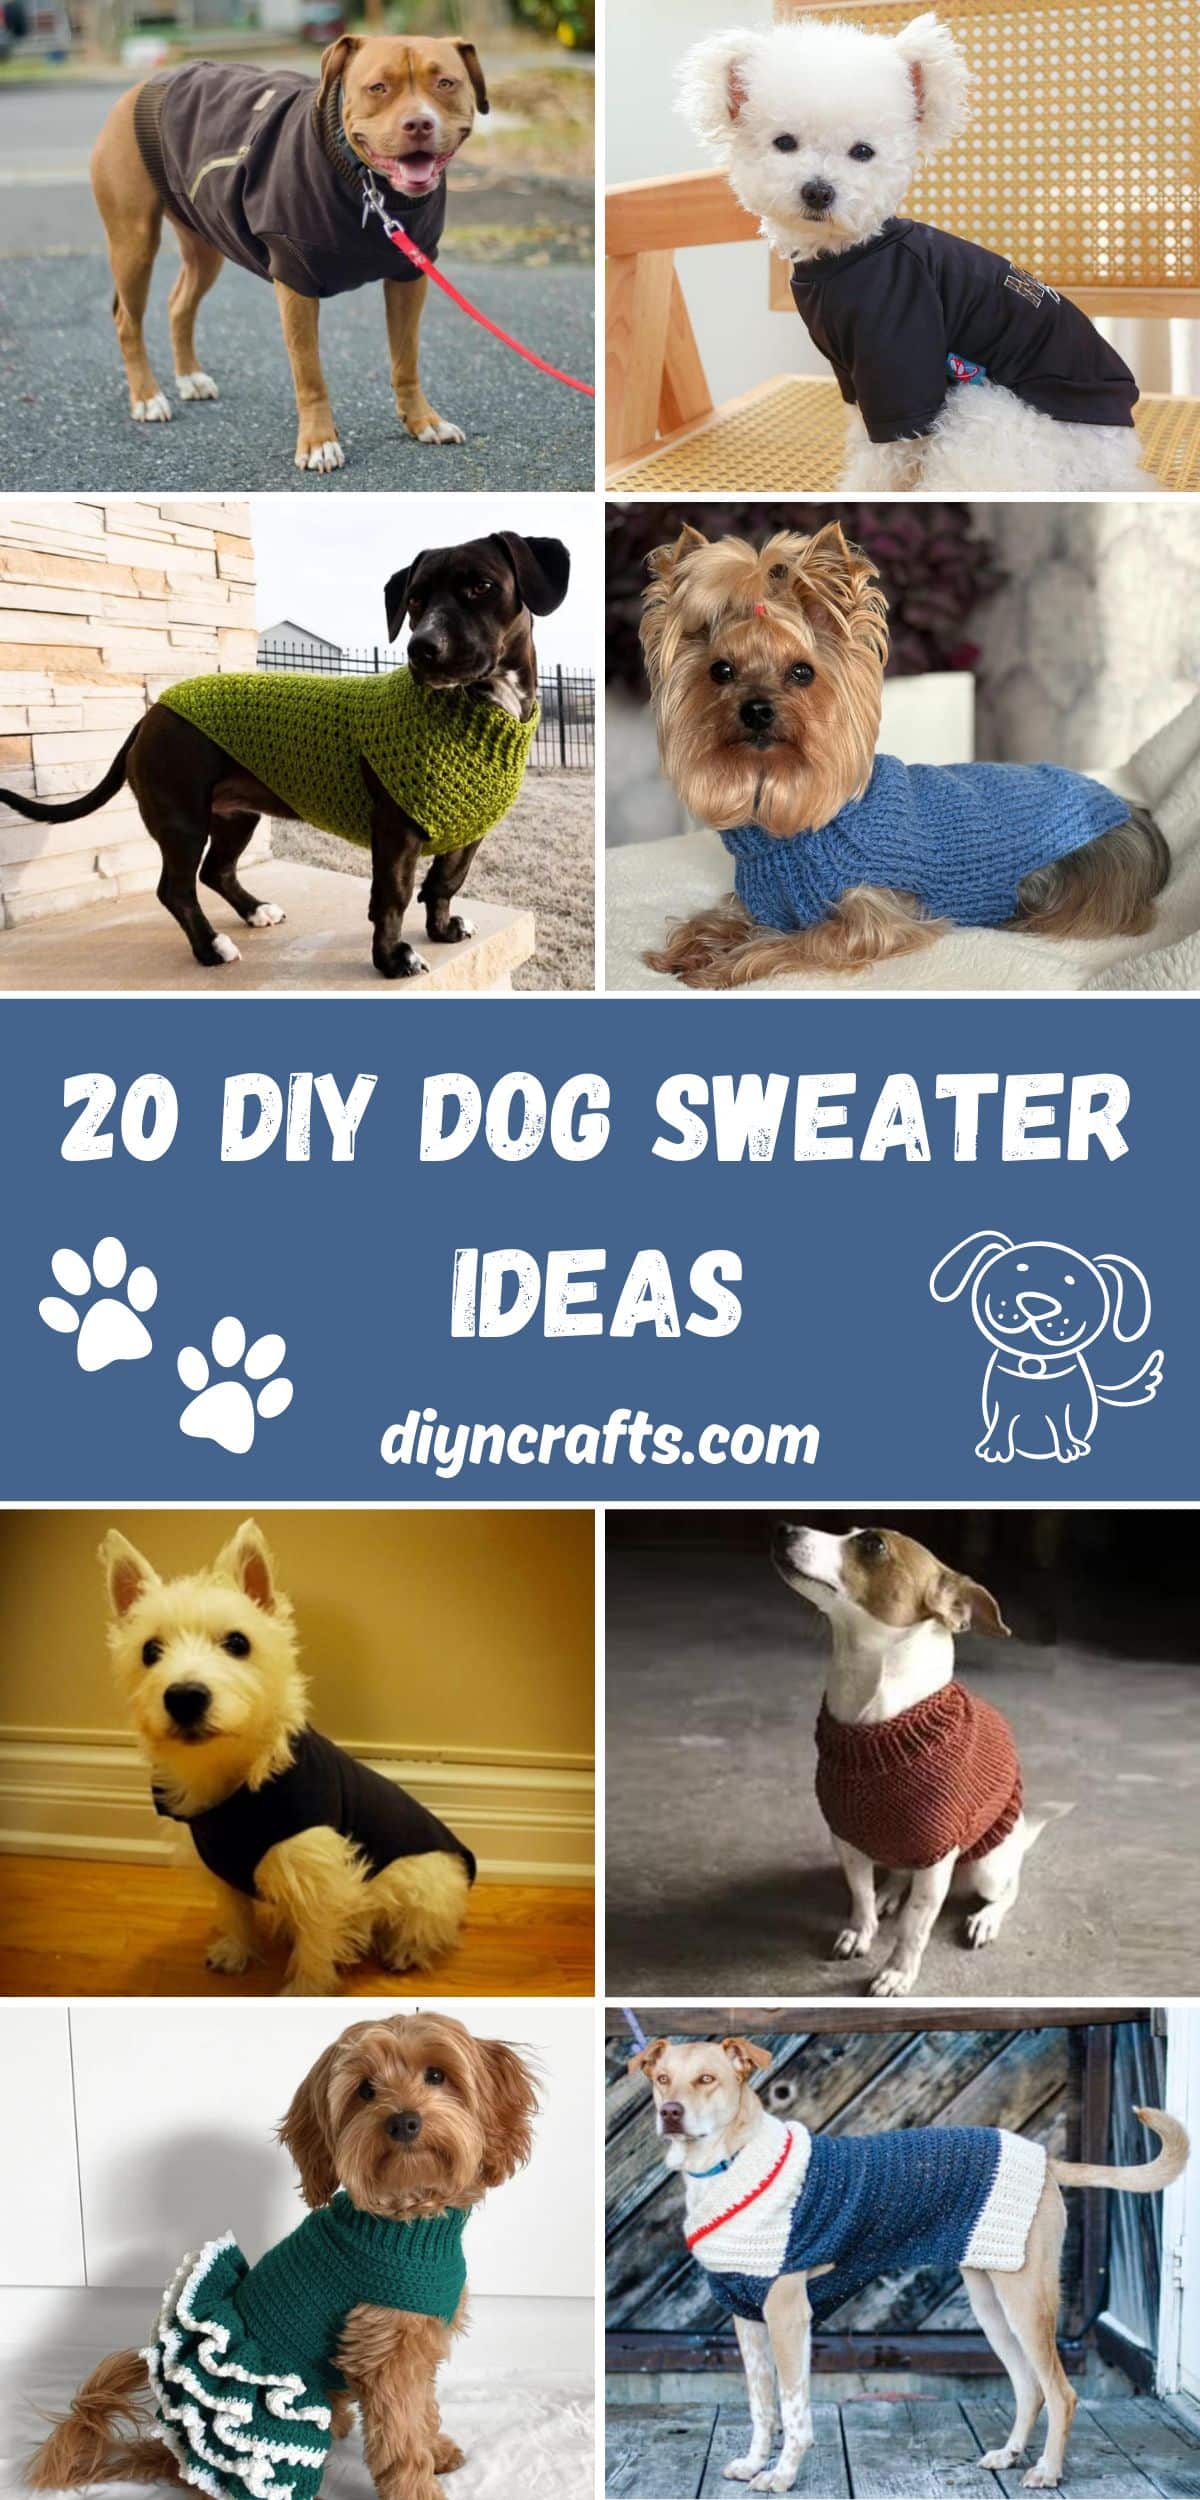 20 DIY Dog Sweater Ideas collage.